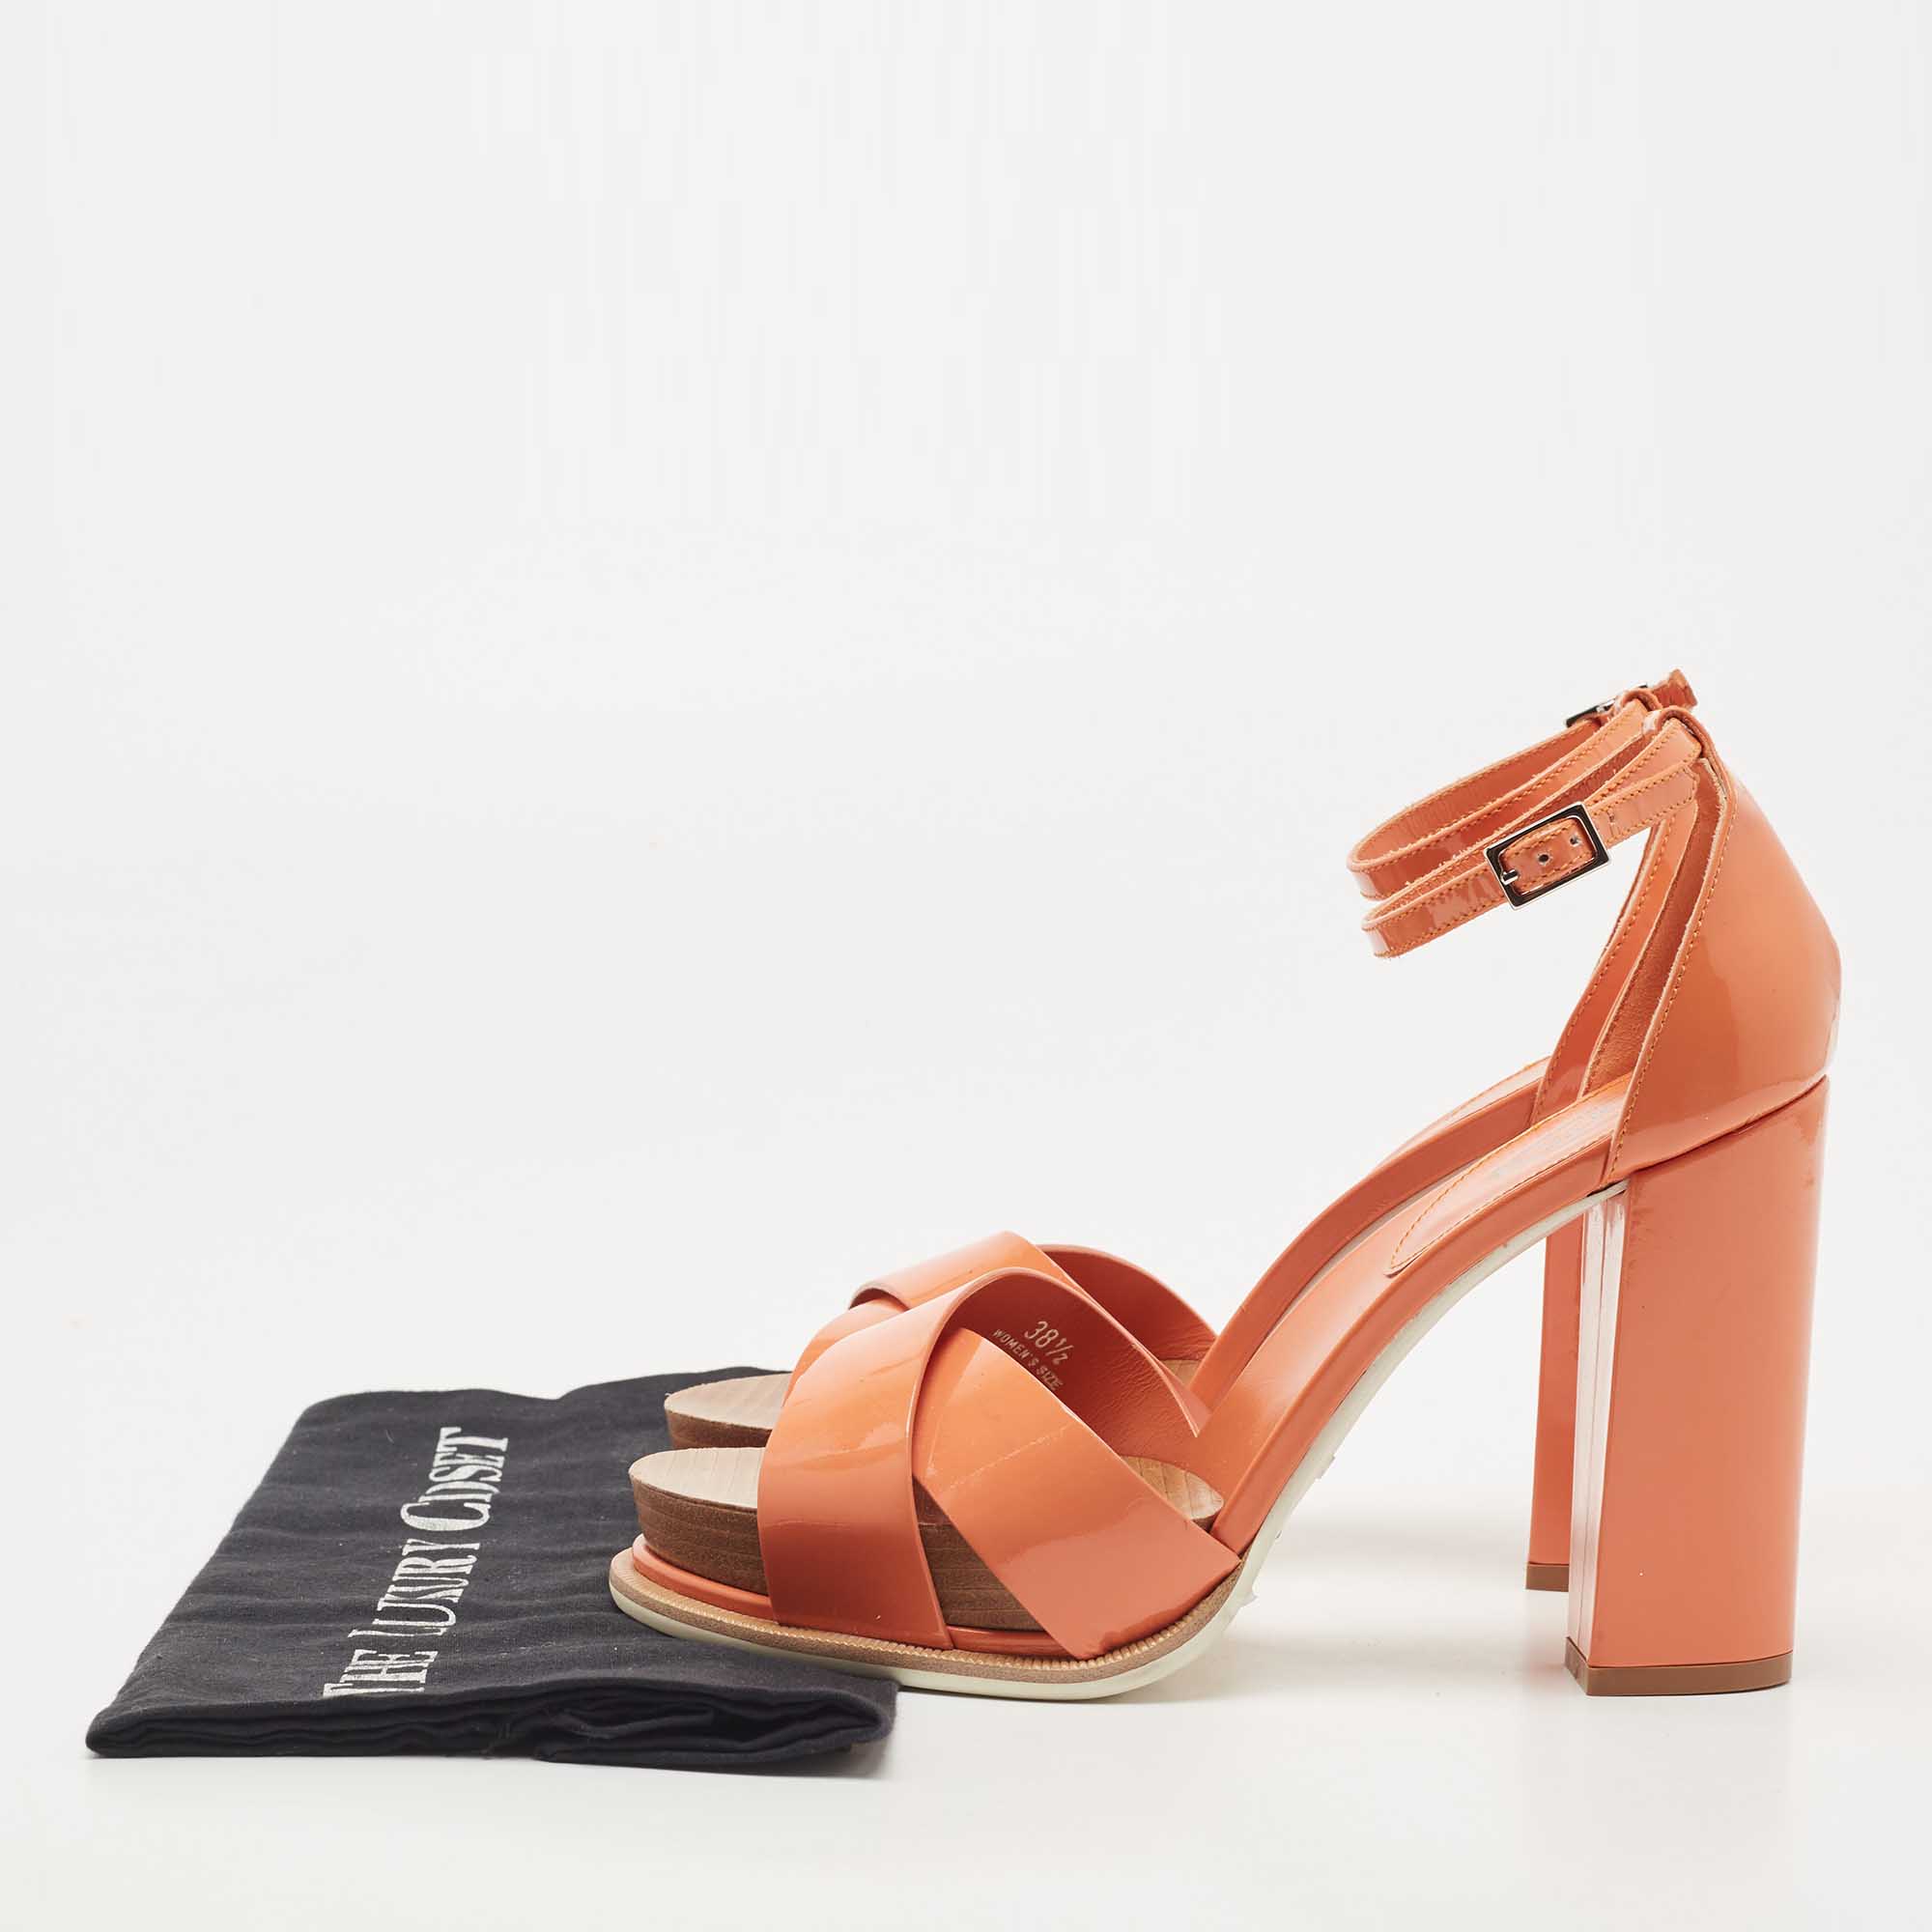 Tod's Light Orange Patent Leather Block Heel Ankle Strap Sandals Size 38.5